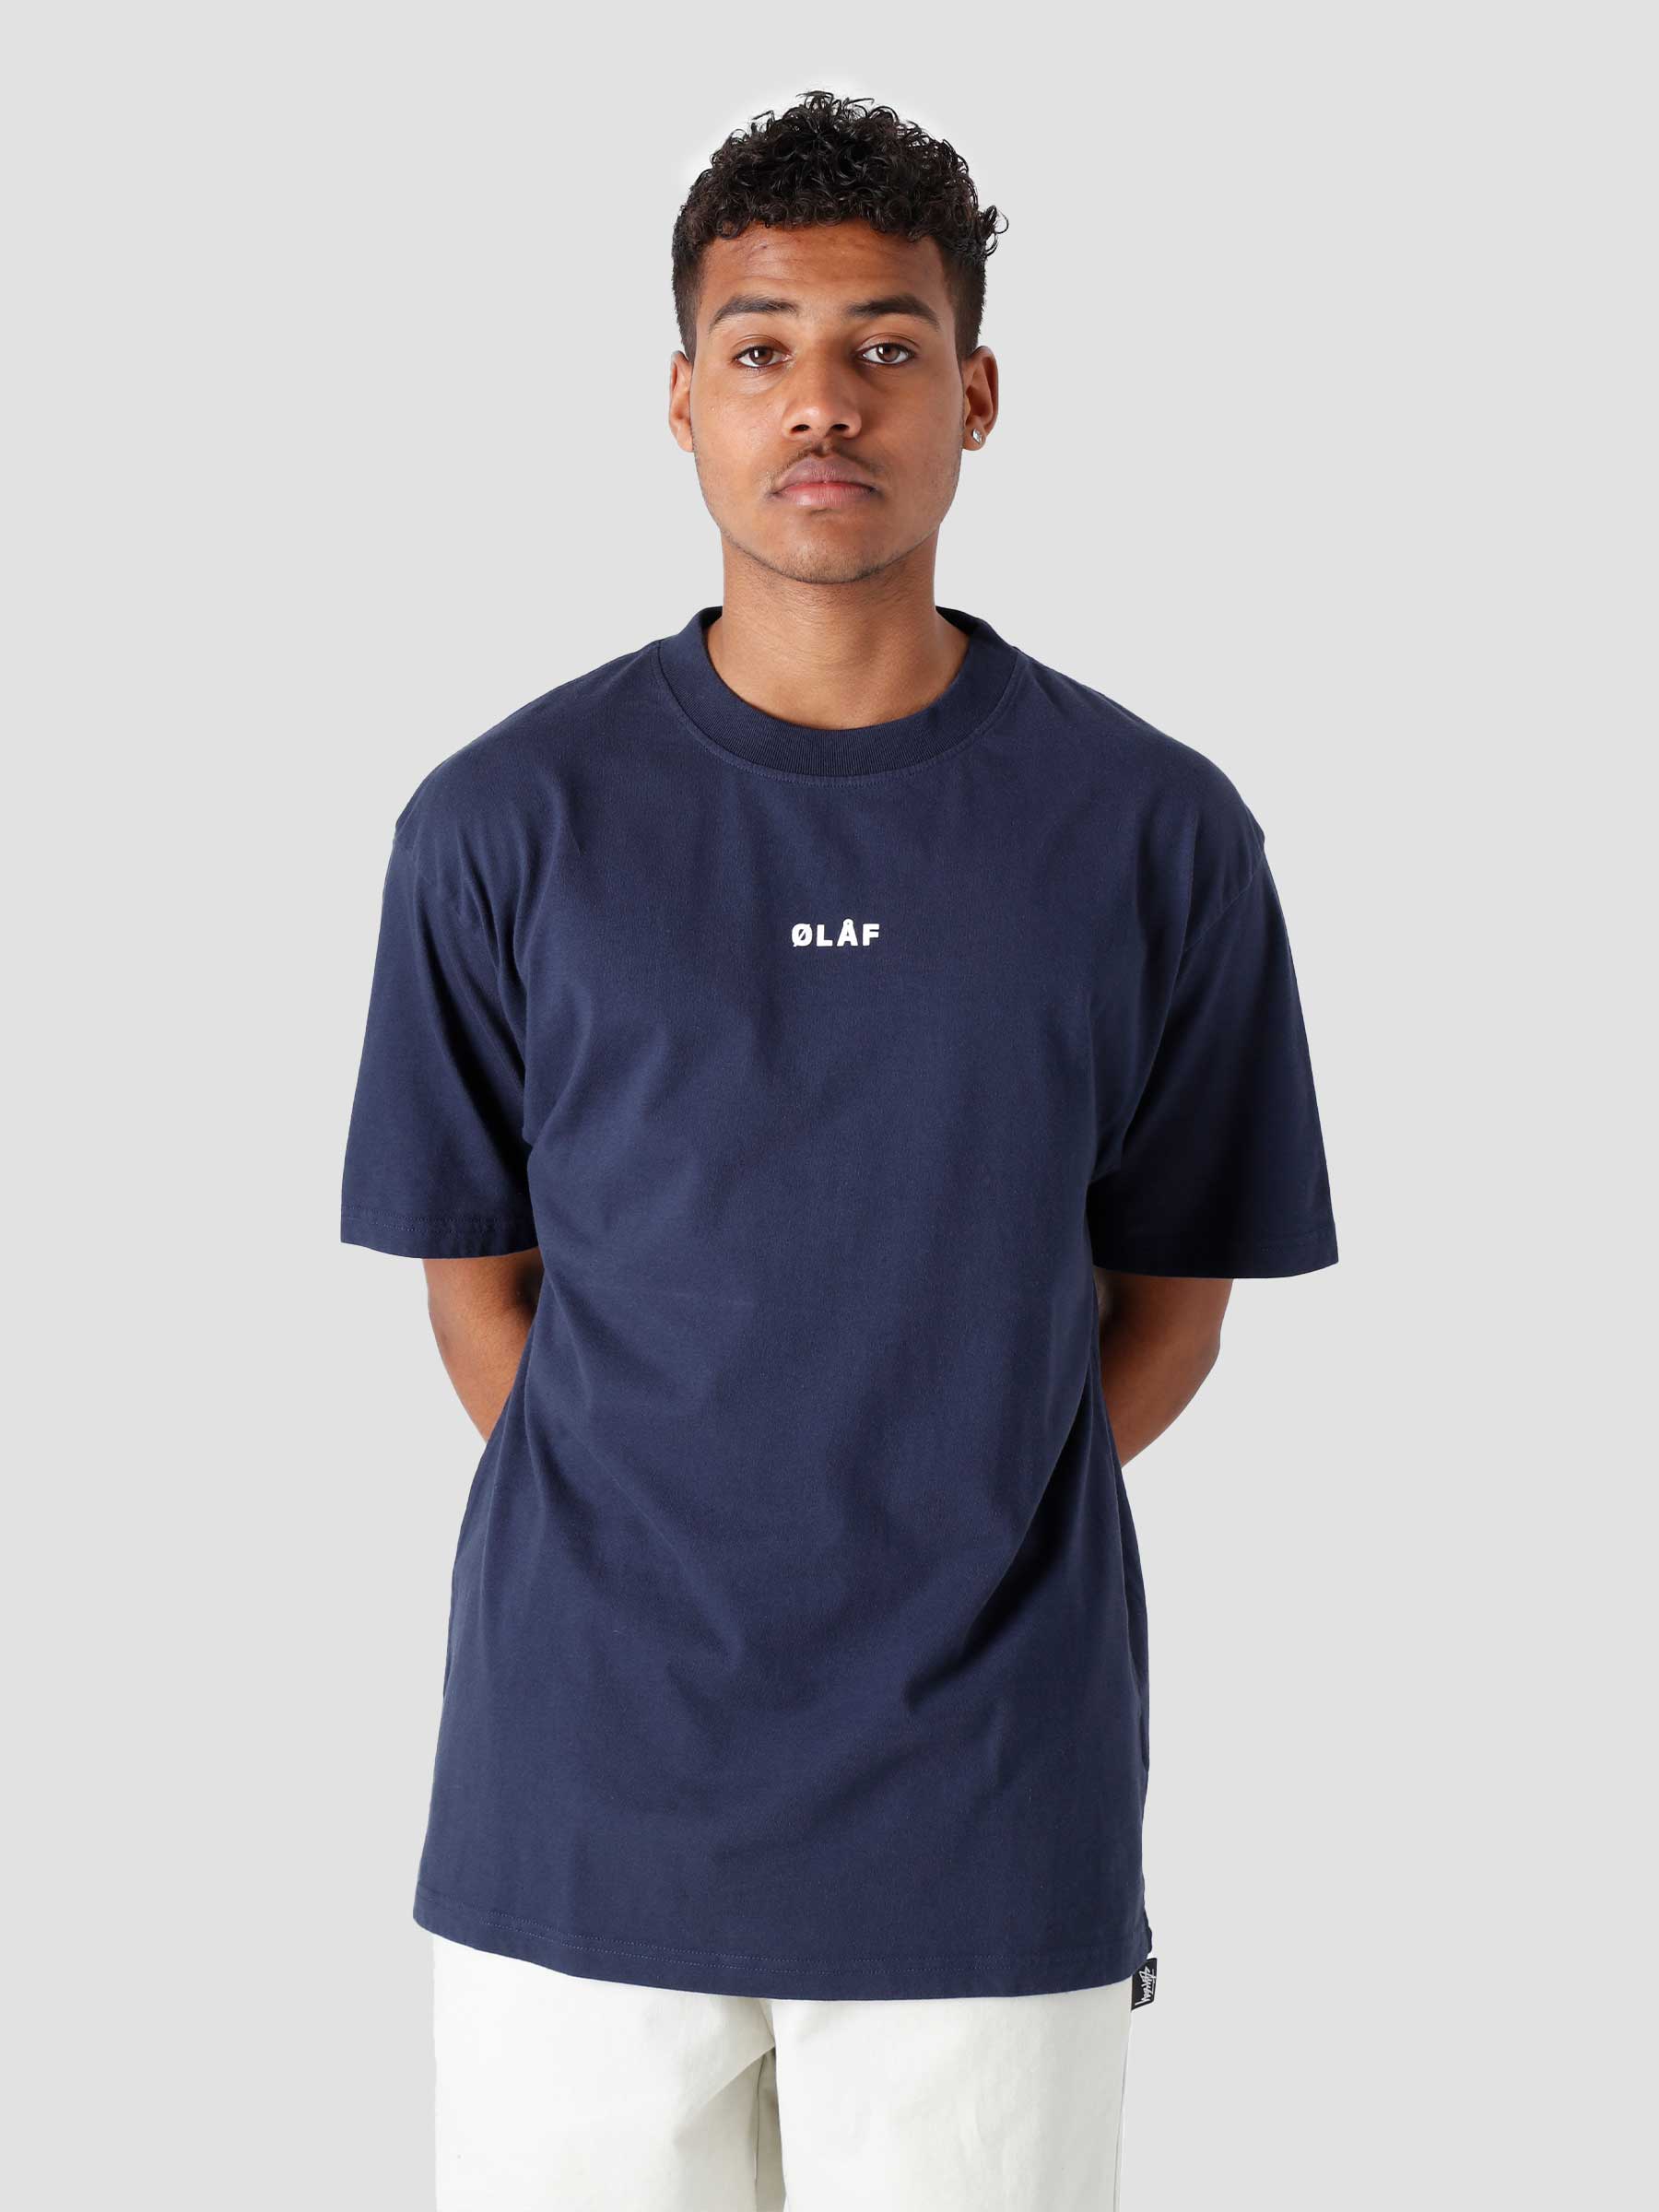 Olaf Block T-Shirt Navy SS22_0002